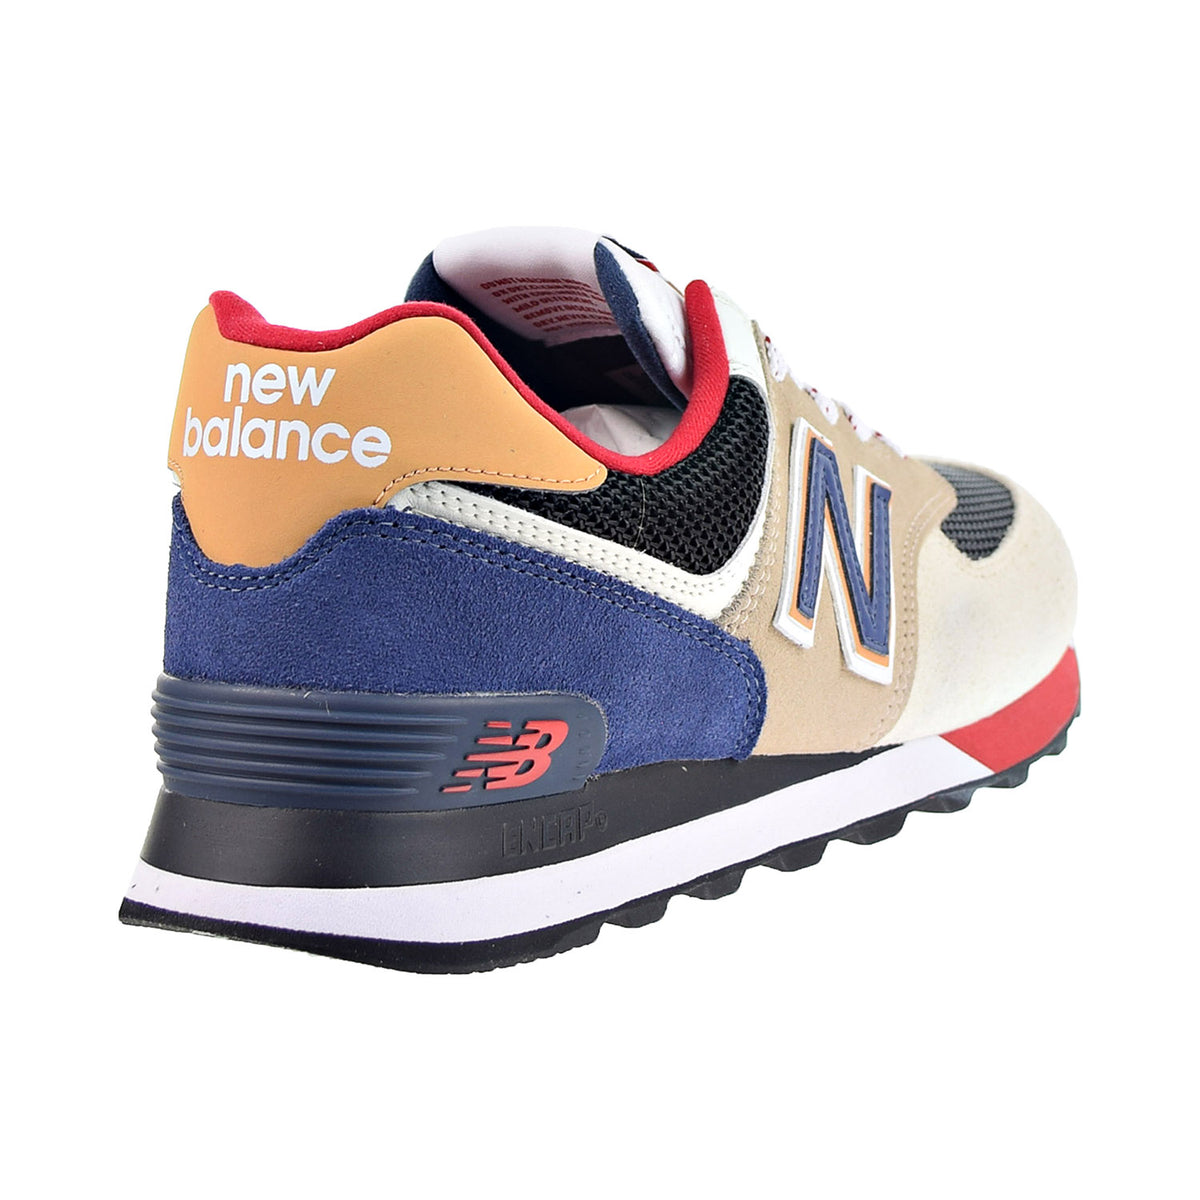 New Balance 574 Men's Shoes Tan/Blue